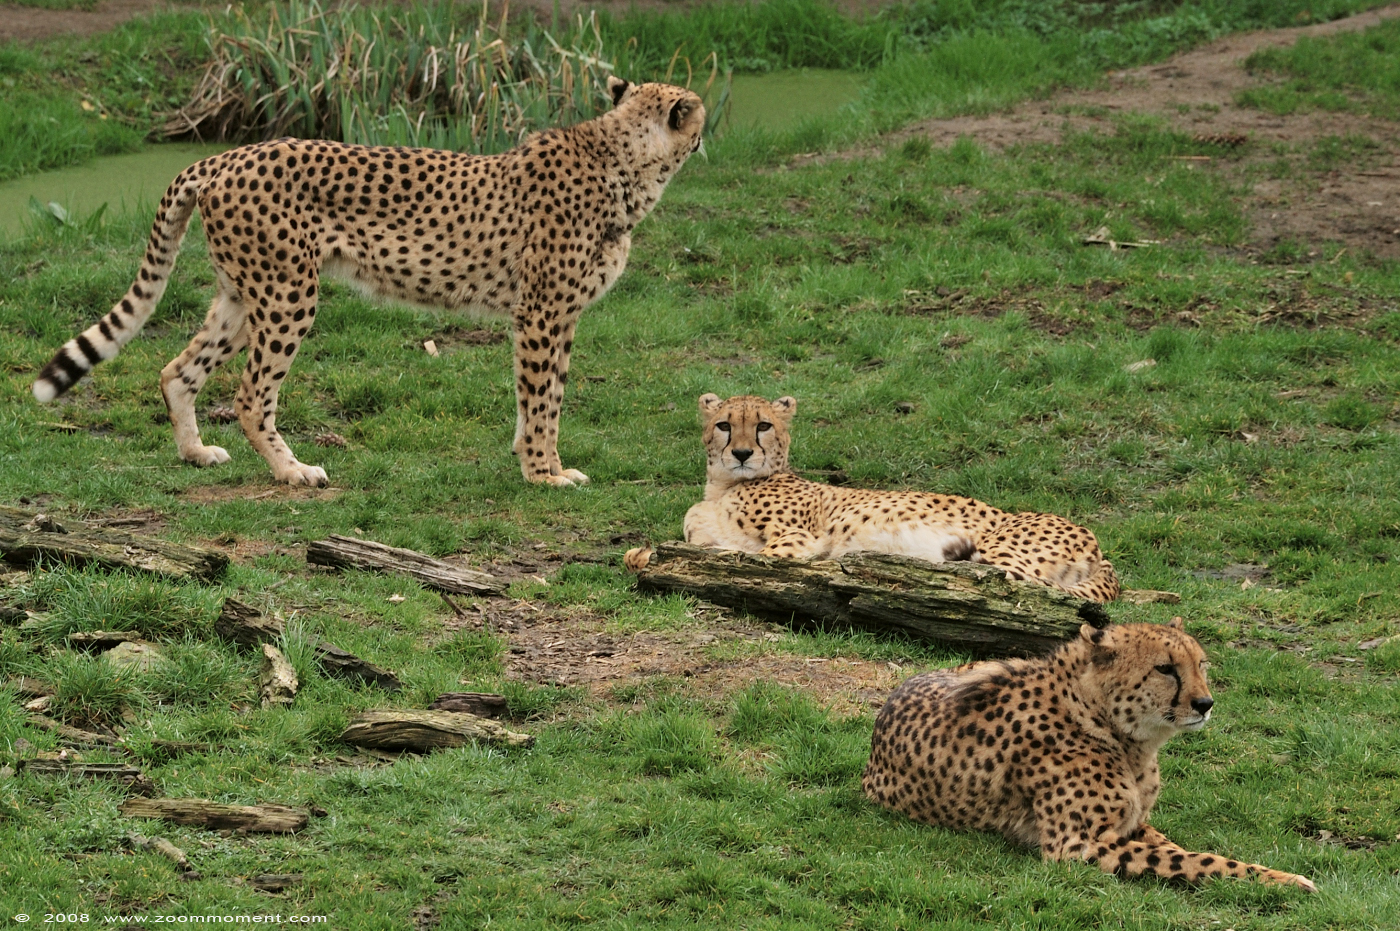 jachtluipaard ( Acinonyx jubatus jubatus ) cheetah
Ключевые слова: Olmen zoo Belgie Belgium jachtluipaard cheetah Acinonyx jubatus